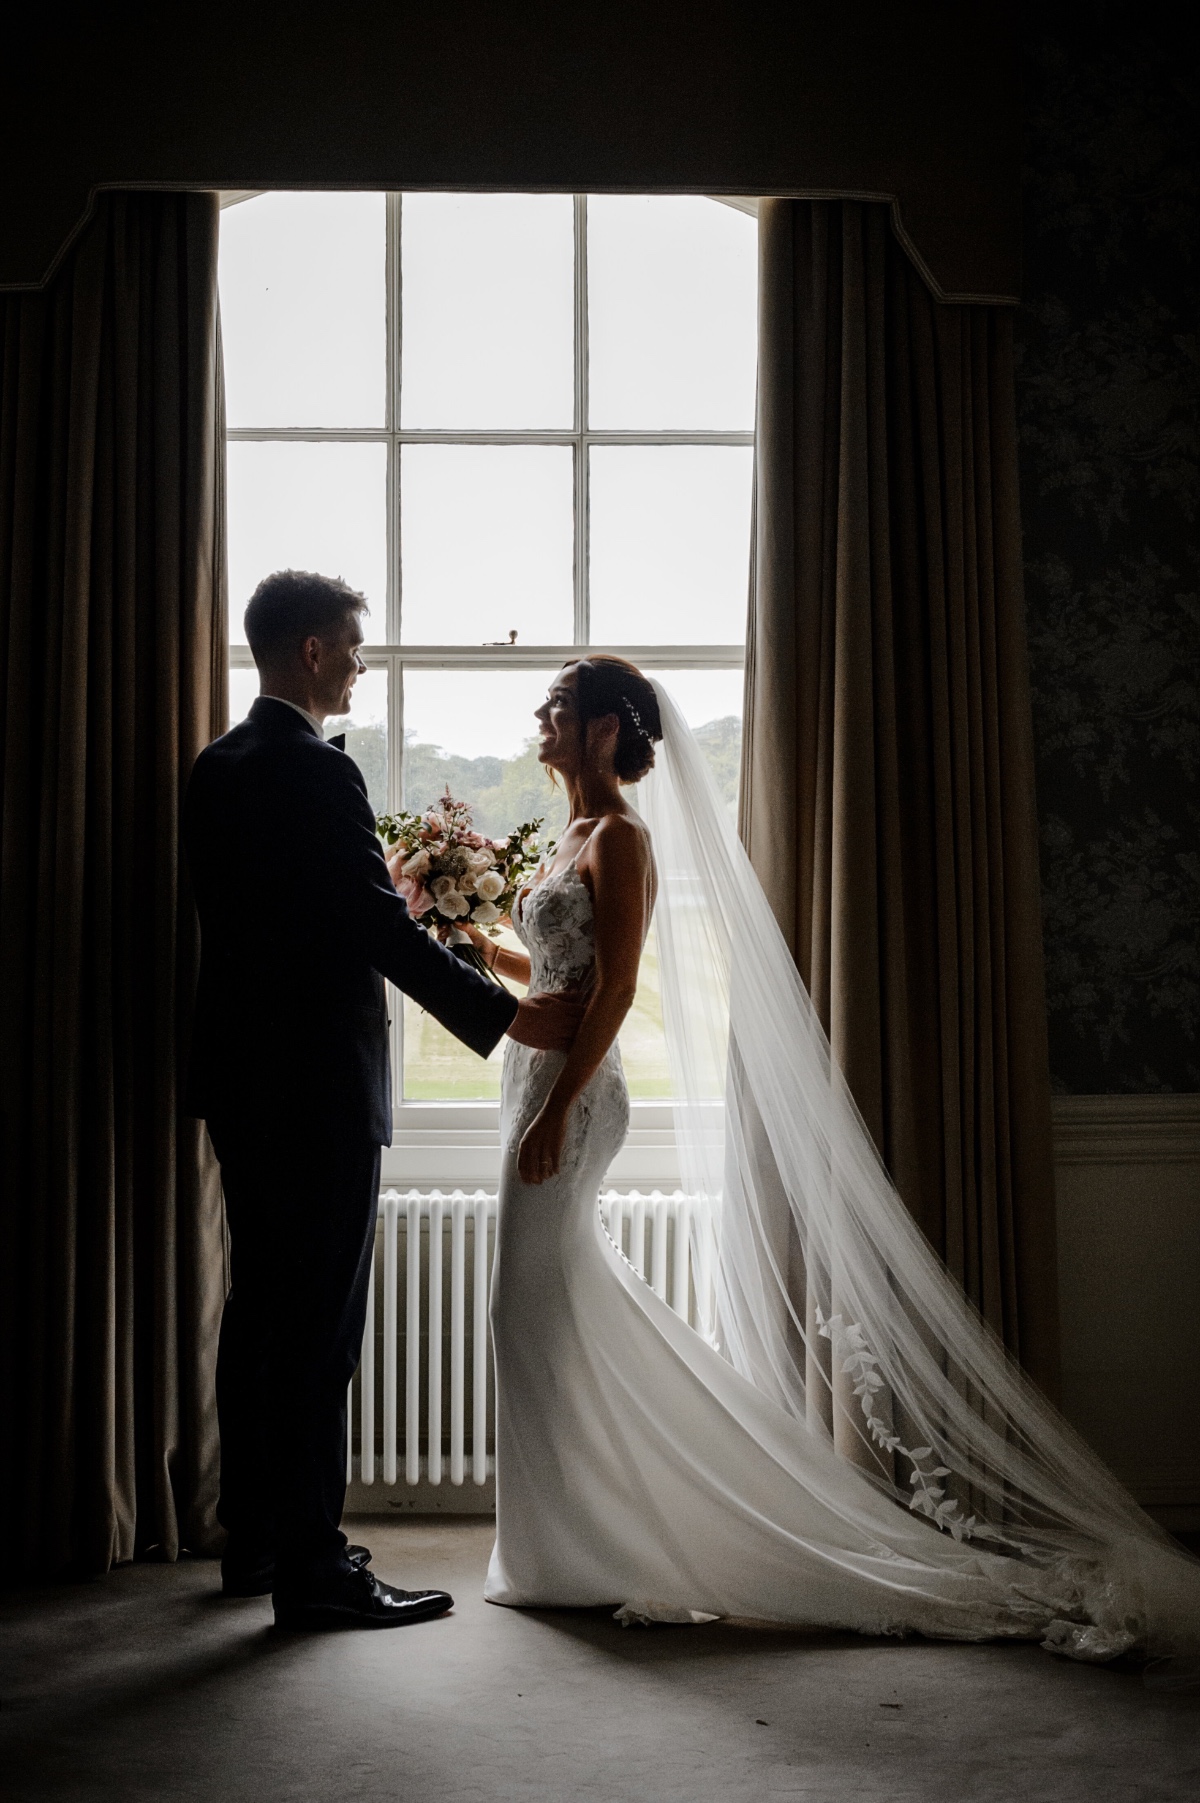 A must-see fairytale rose wedding at luxury estate Avington Park